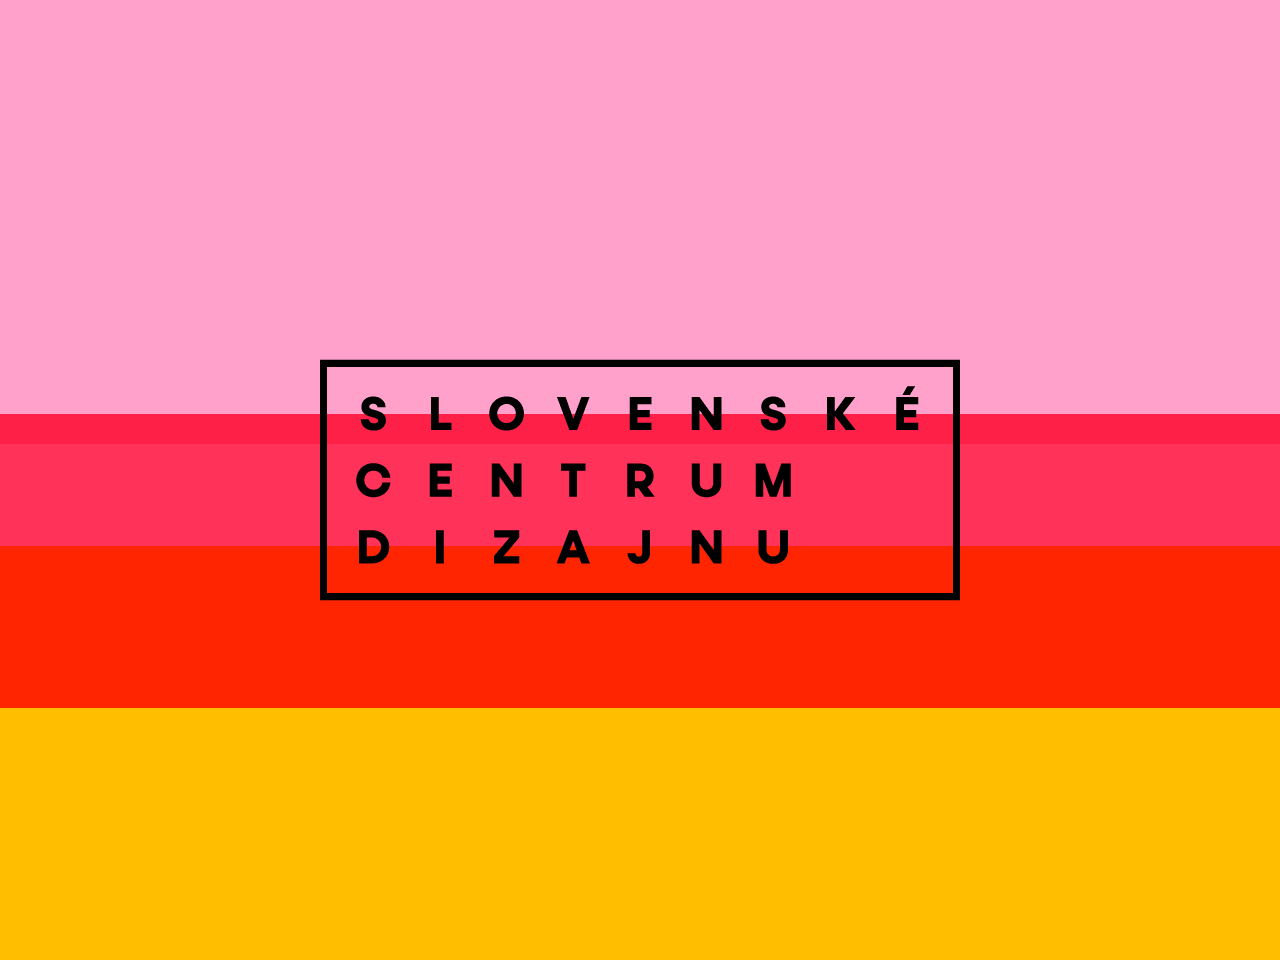 Branding: Slovenské centrum dizajnu